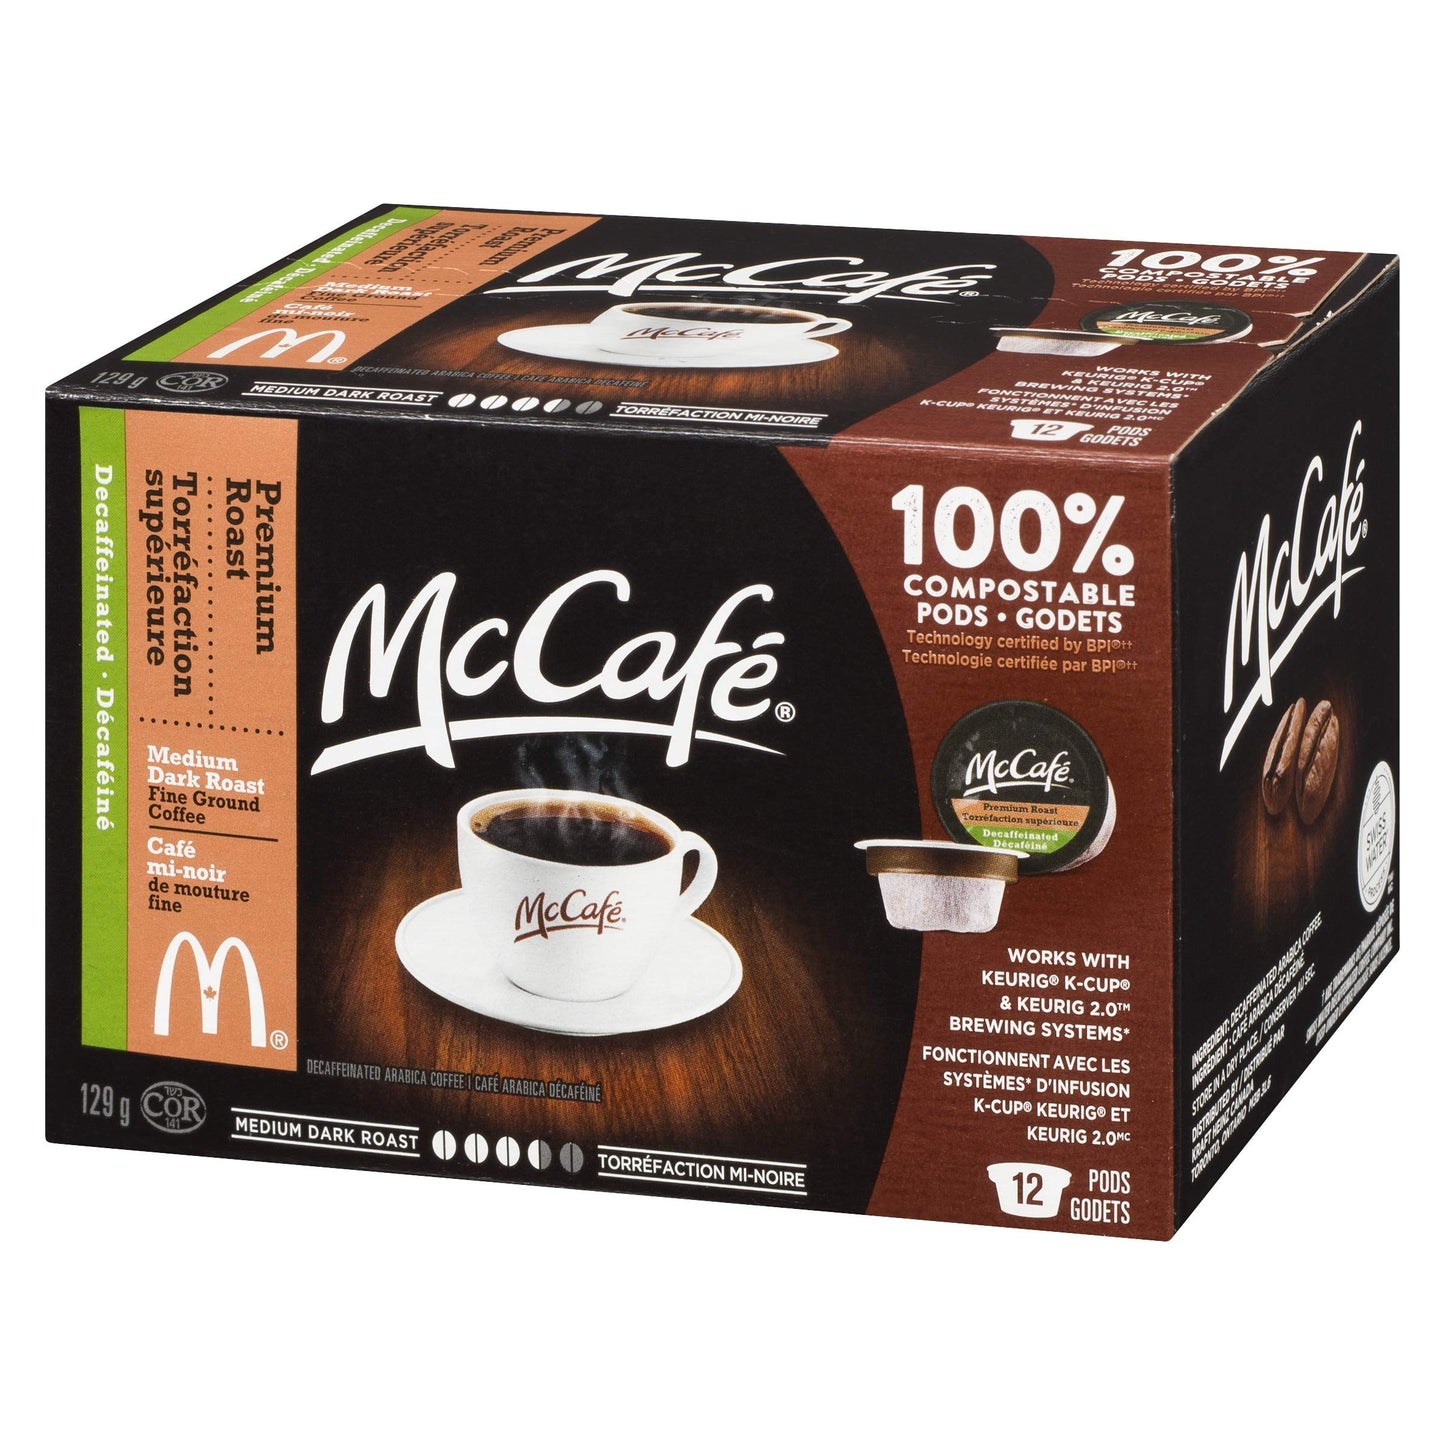 McCafe Premium Roast Decaffeinated Coffee Single Serve Pods 12ct Shipped from Canada)